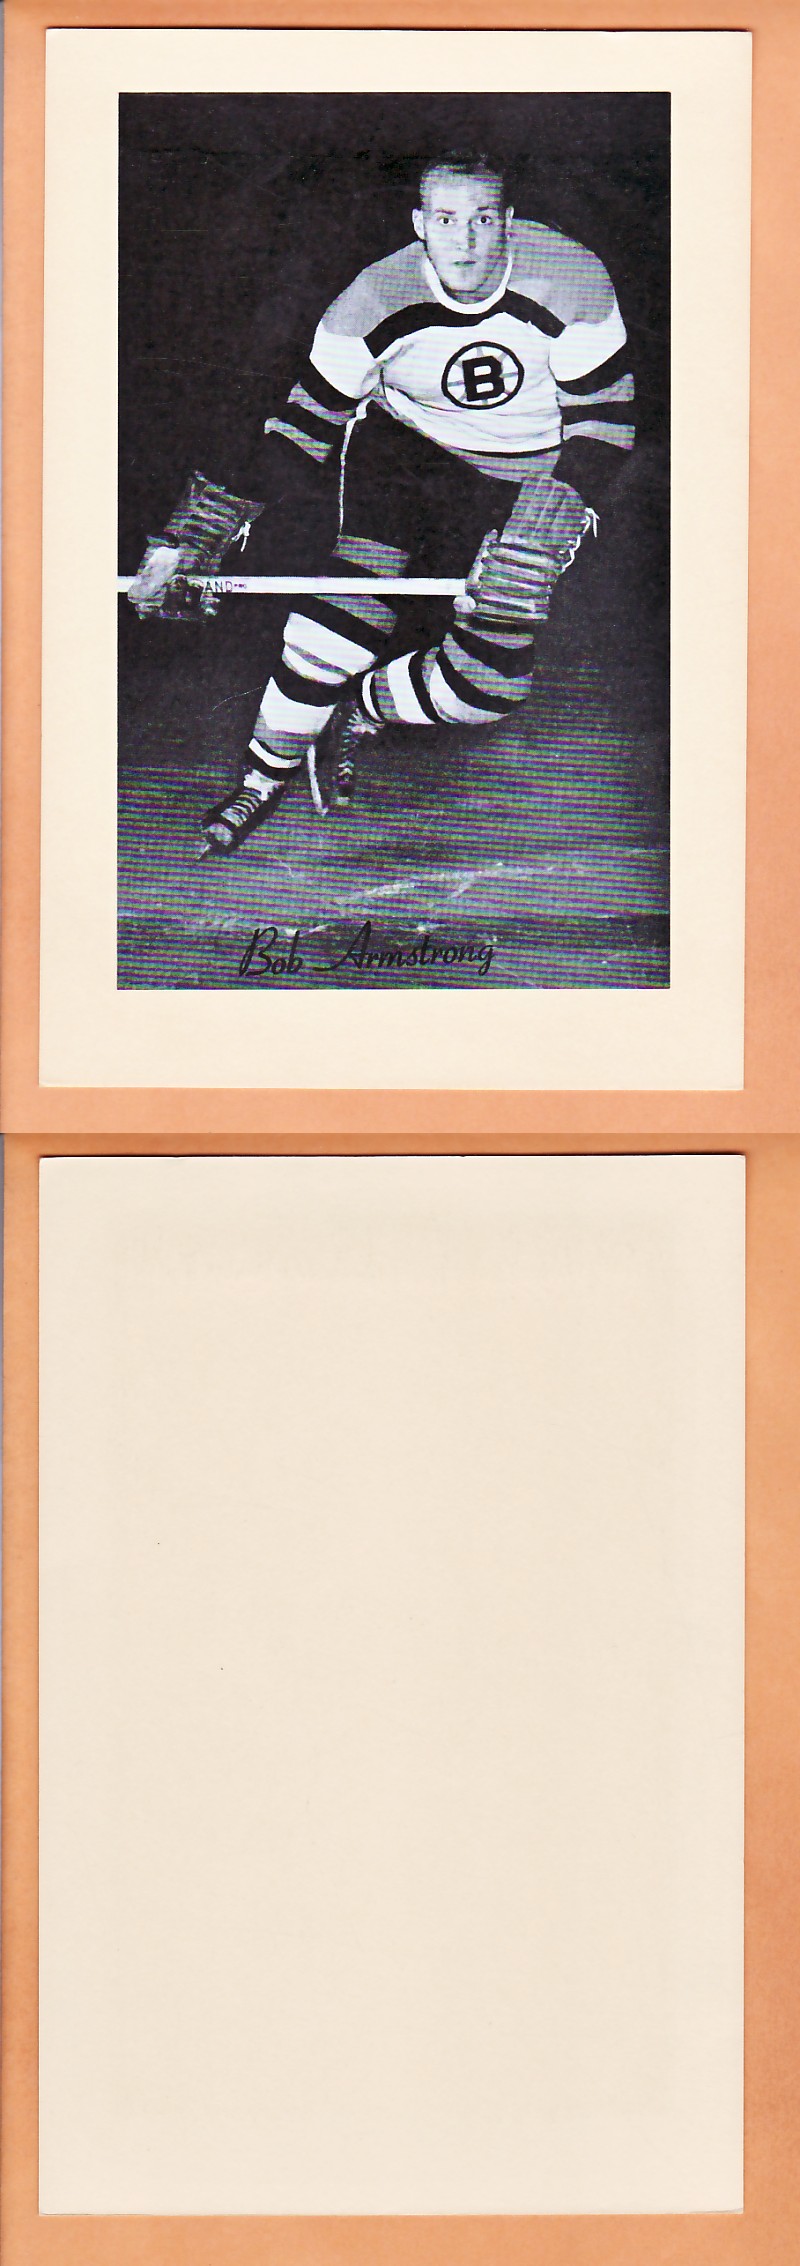 1945-64 BEEHIVE PHOTO GR.2 B.ARMSTRONG photo